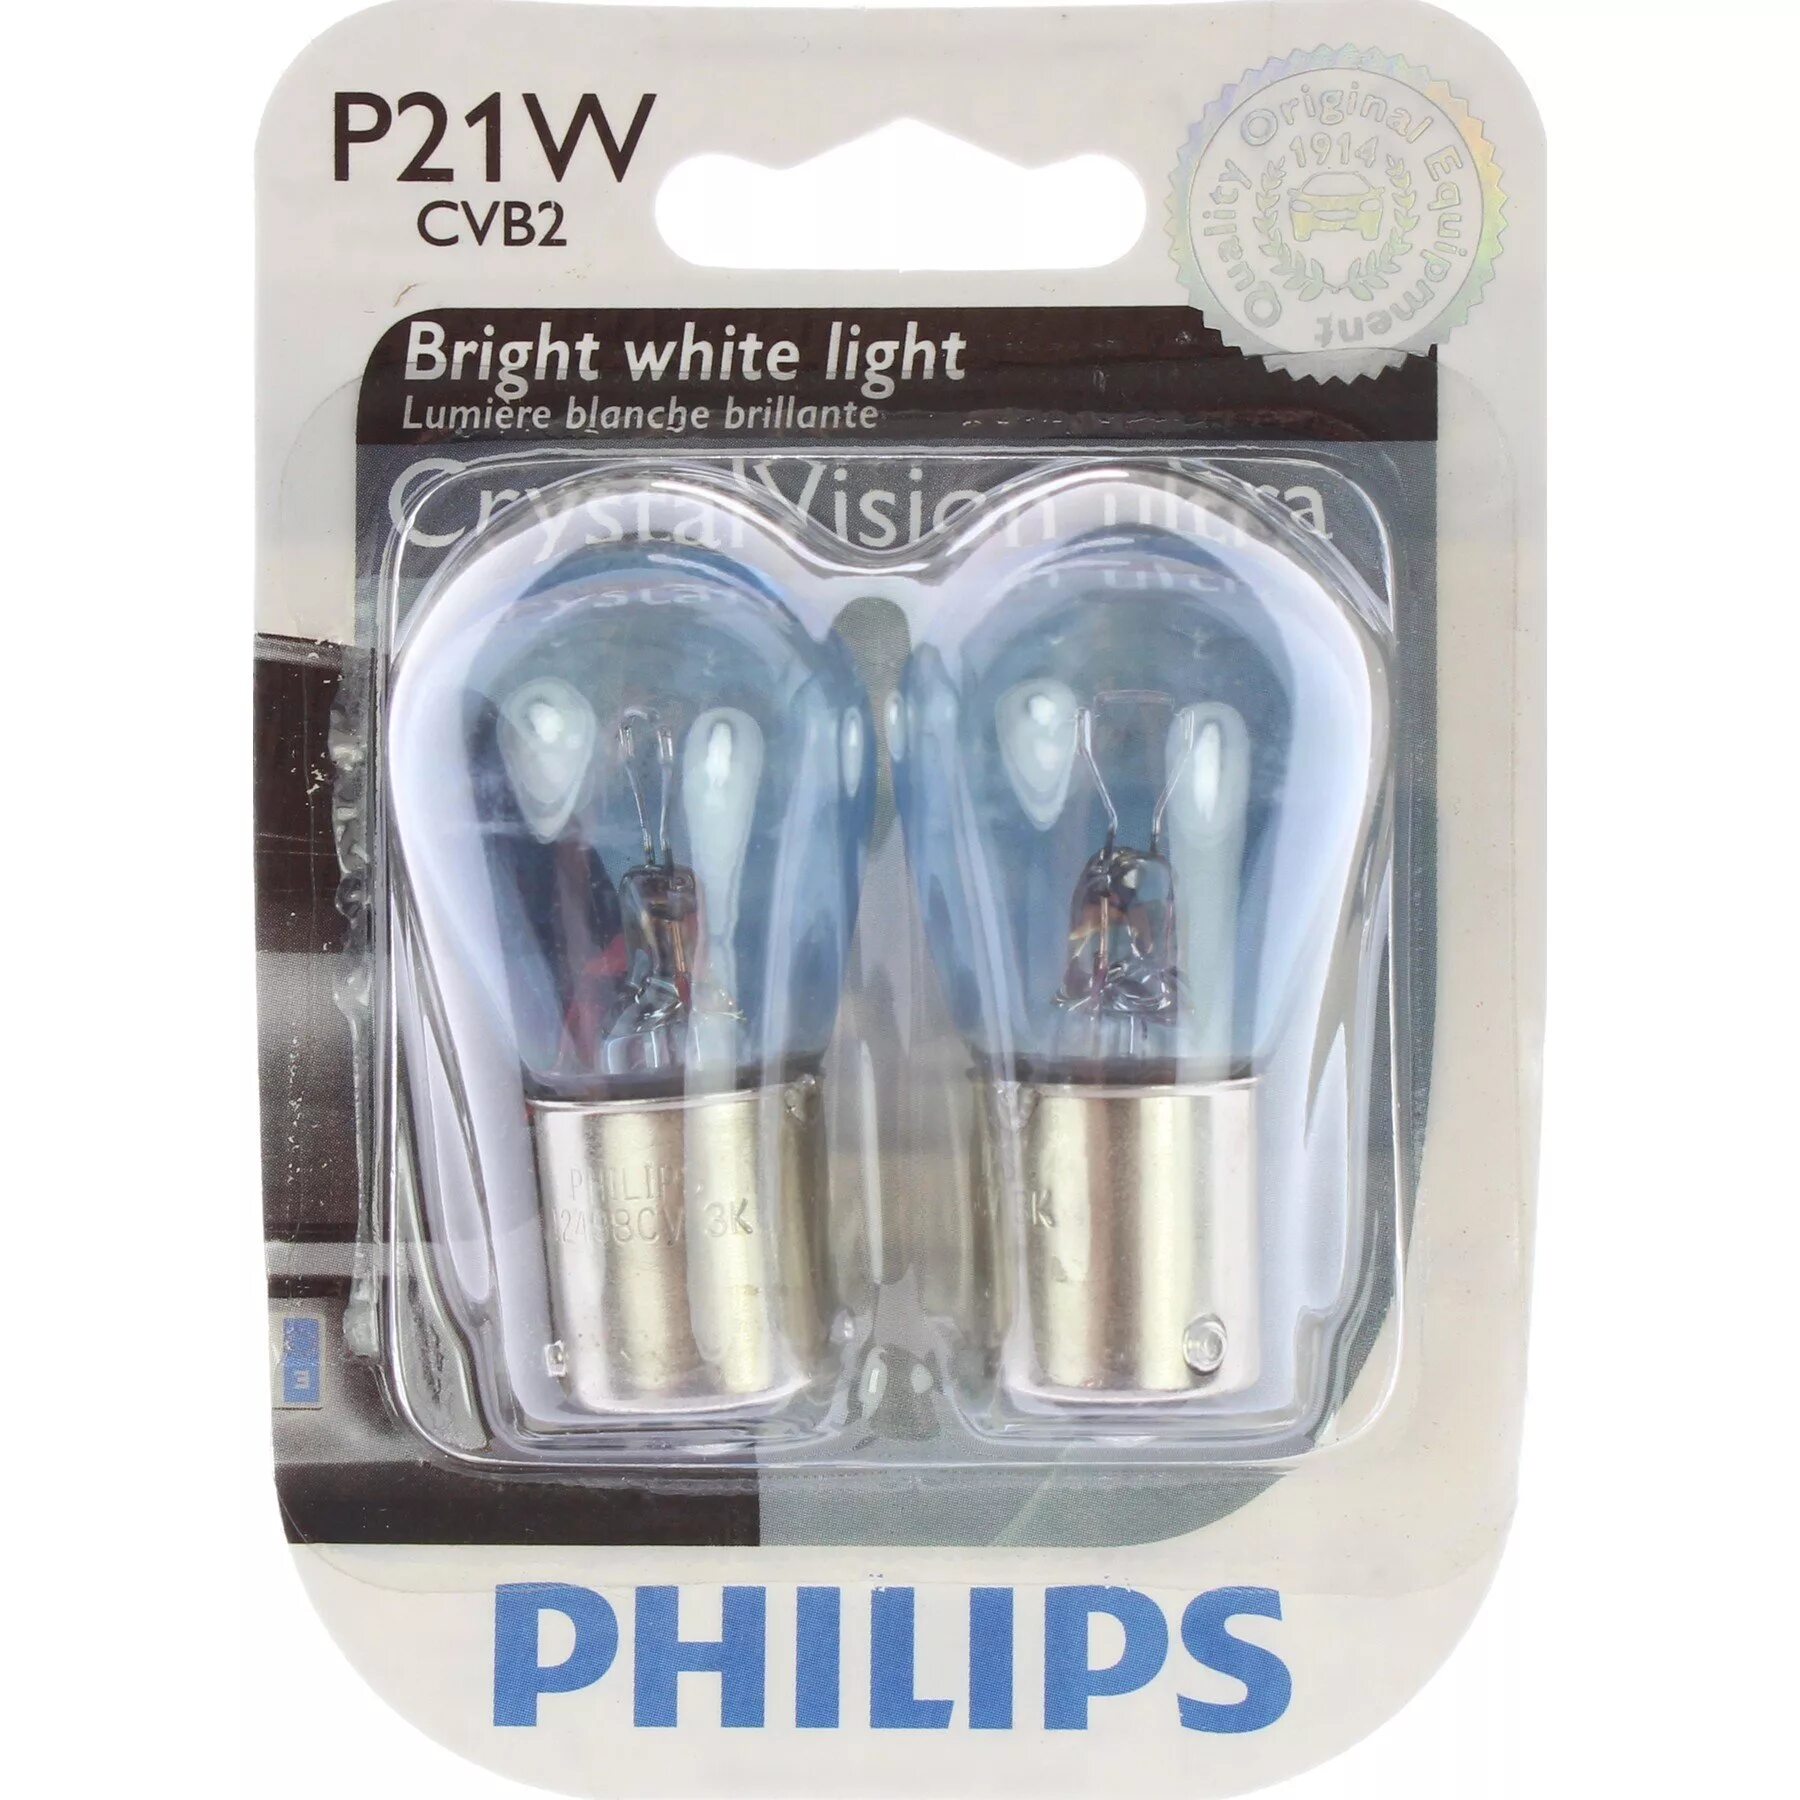 Philips Crystal Vision Ultra Light p21w. P21w светодиодная Philips белый свет. Лампы Philips Crystal Vision p21w. Philips 12498cvb2 p21w CRYSTALVISION Ultra Miniature Bulb. Филипс 21